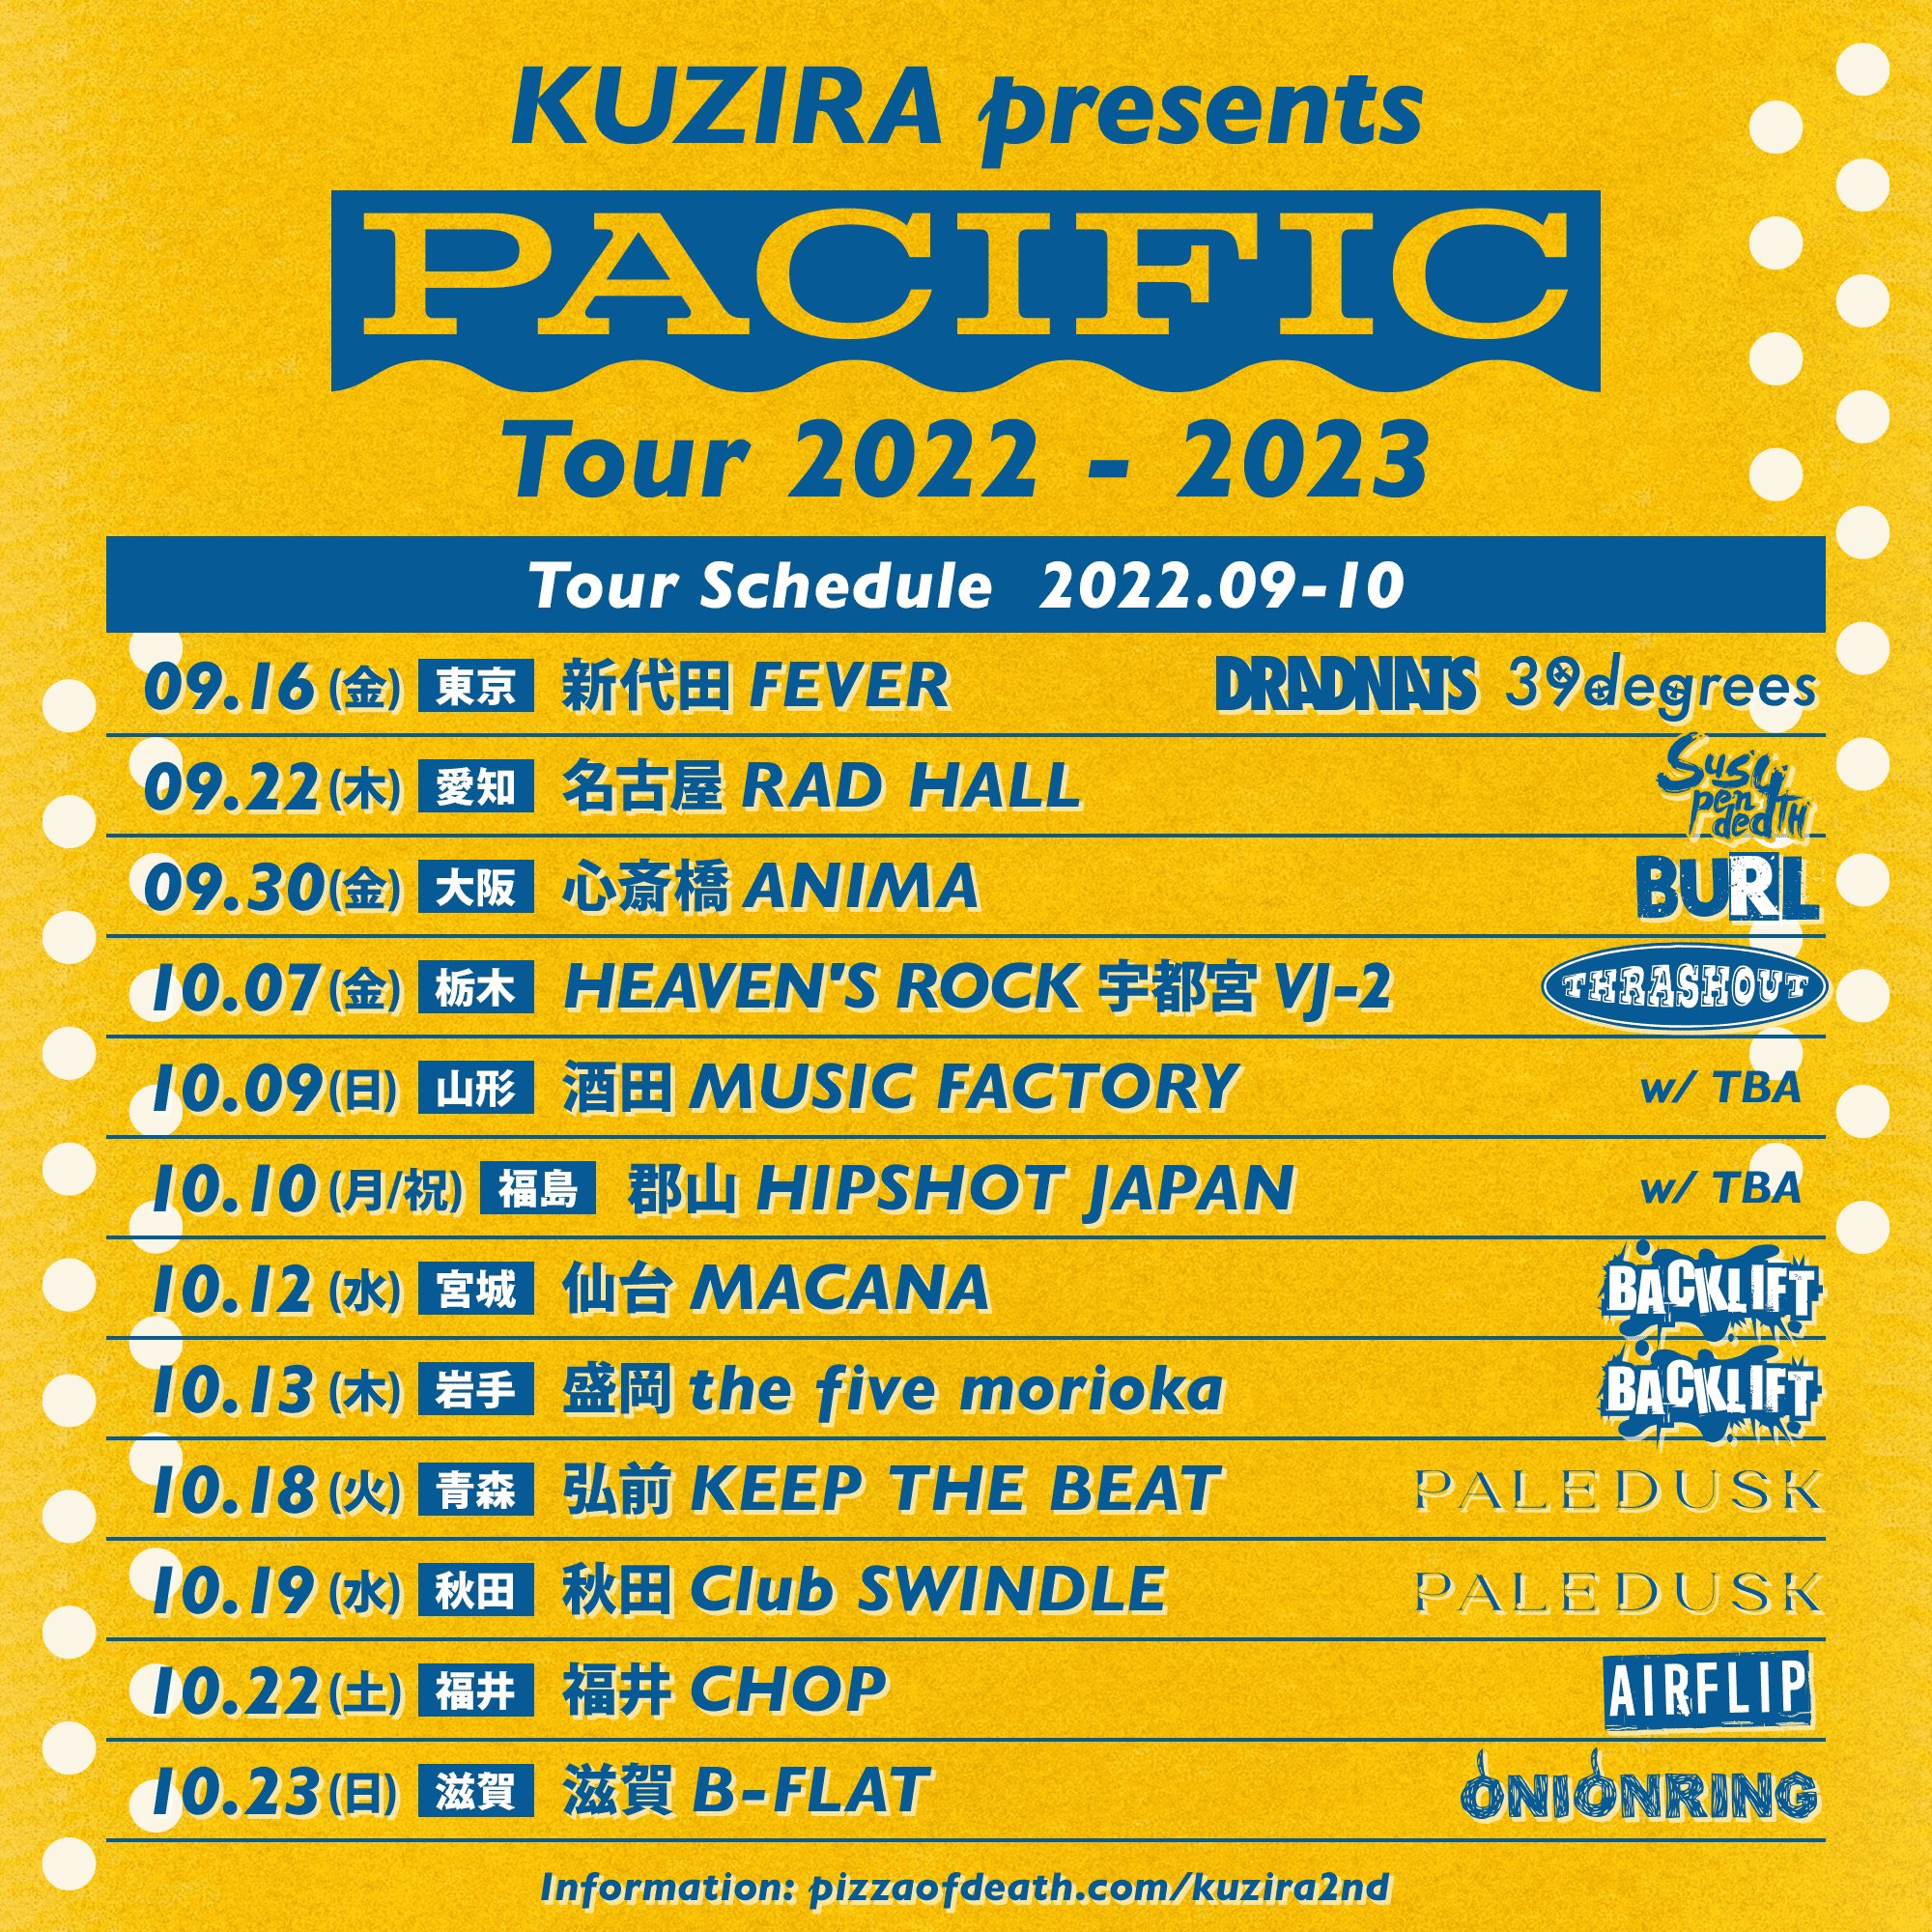 KUZIRA presents.【Pacific Tour 2022-2023】